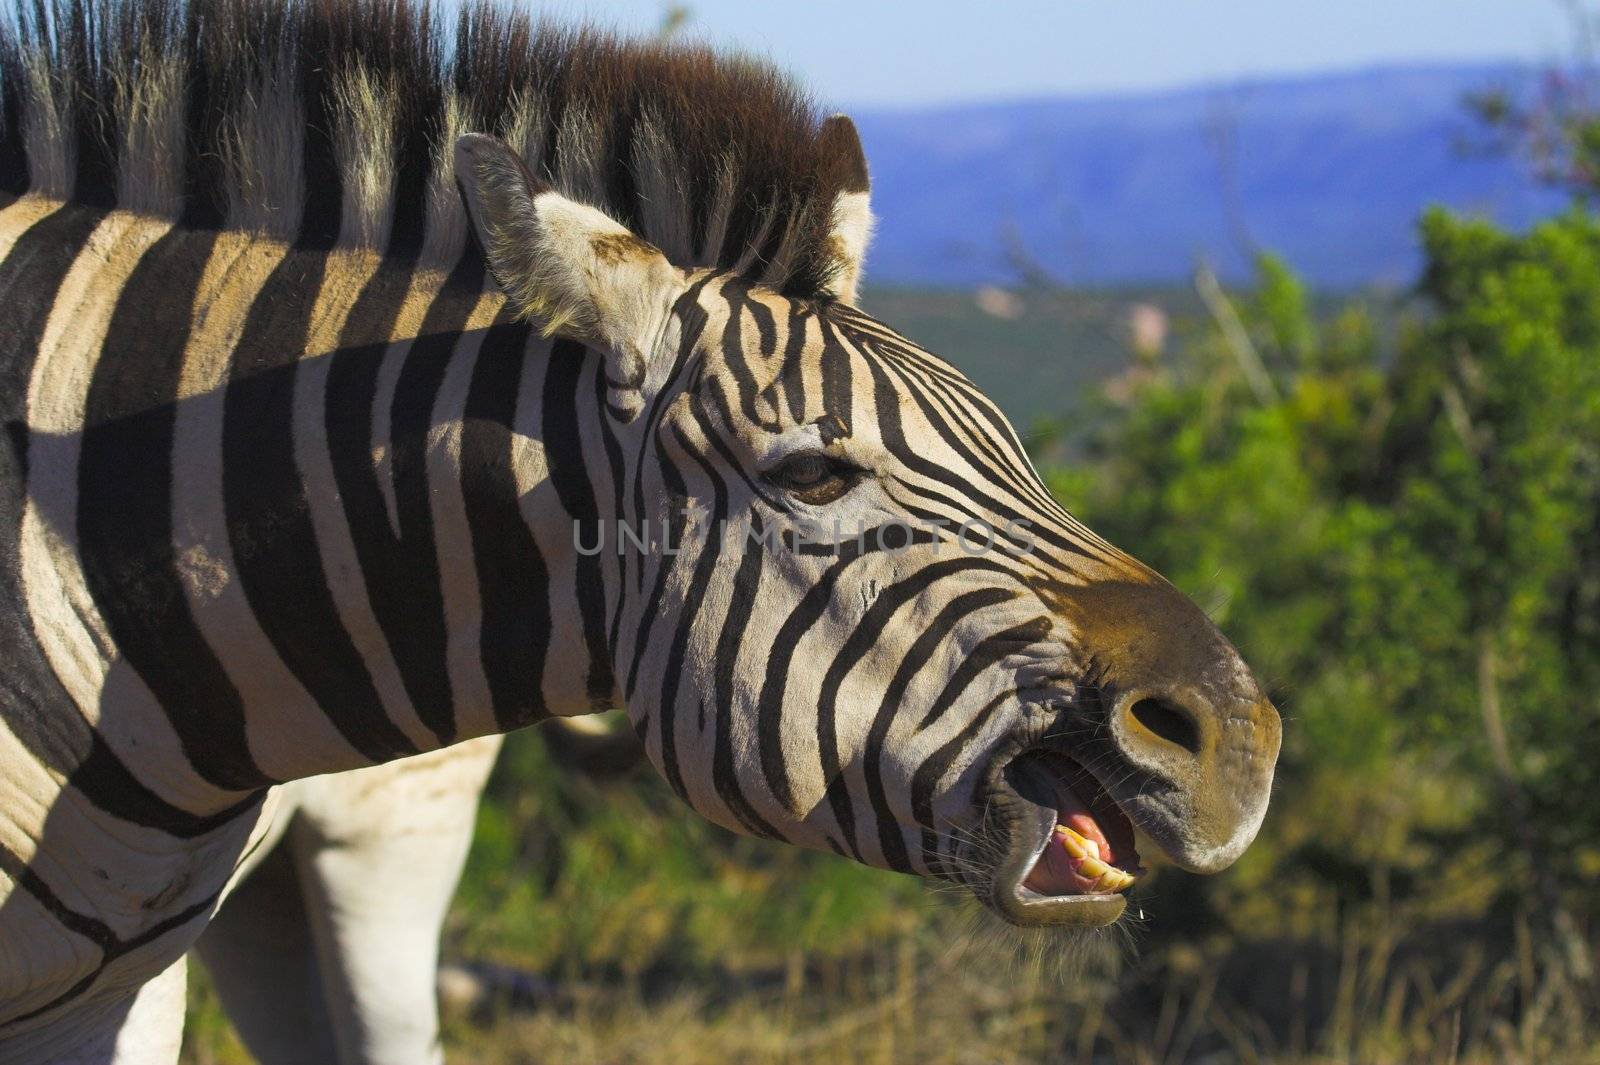 Zebra showing his teeth